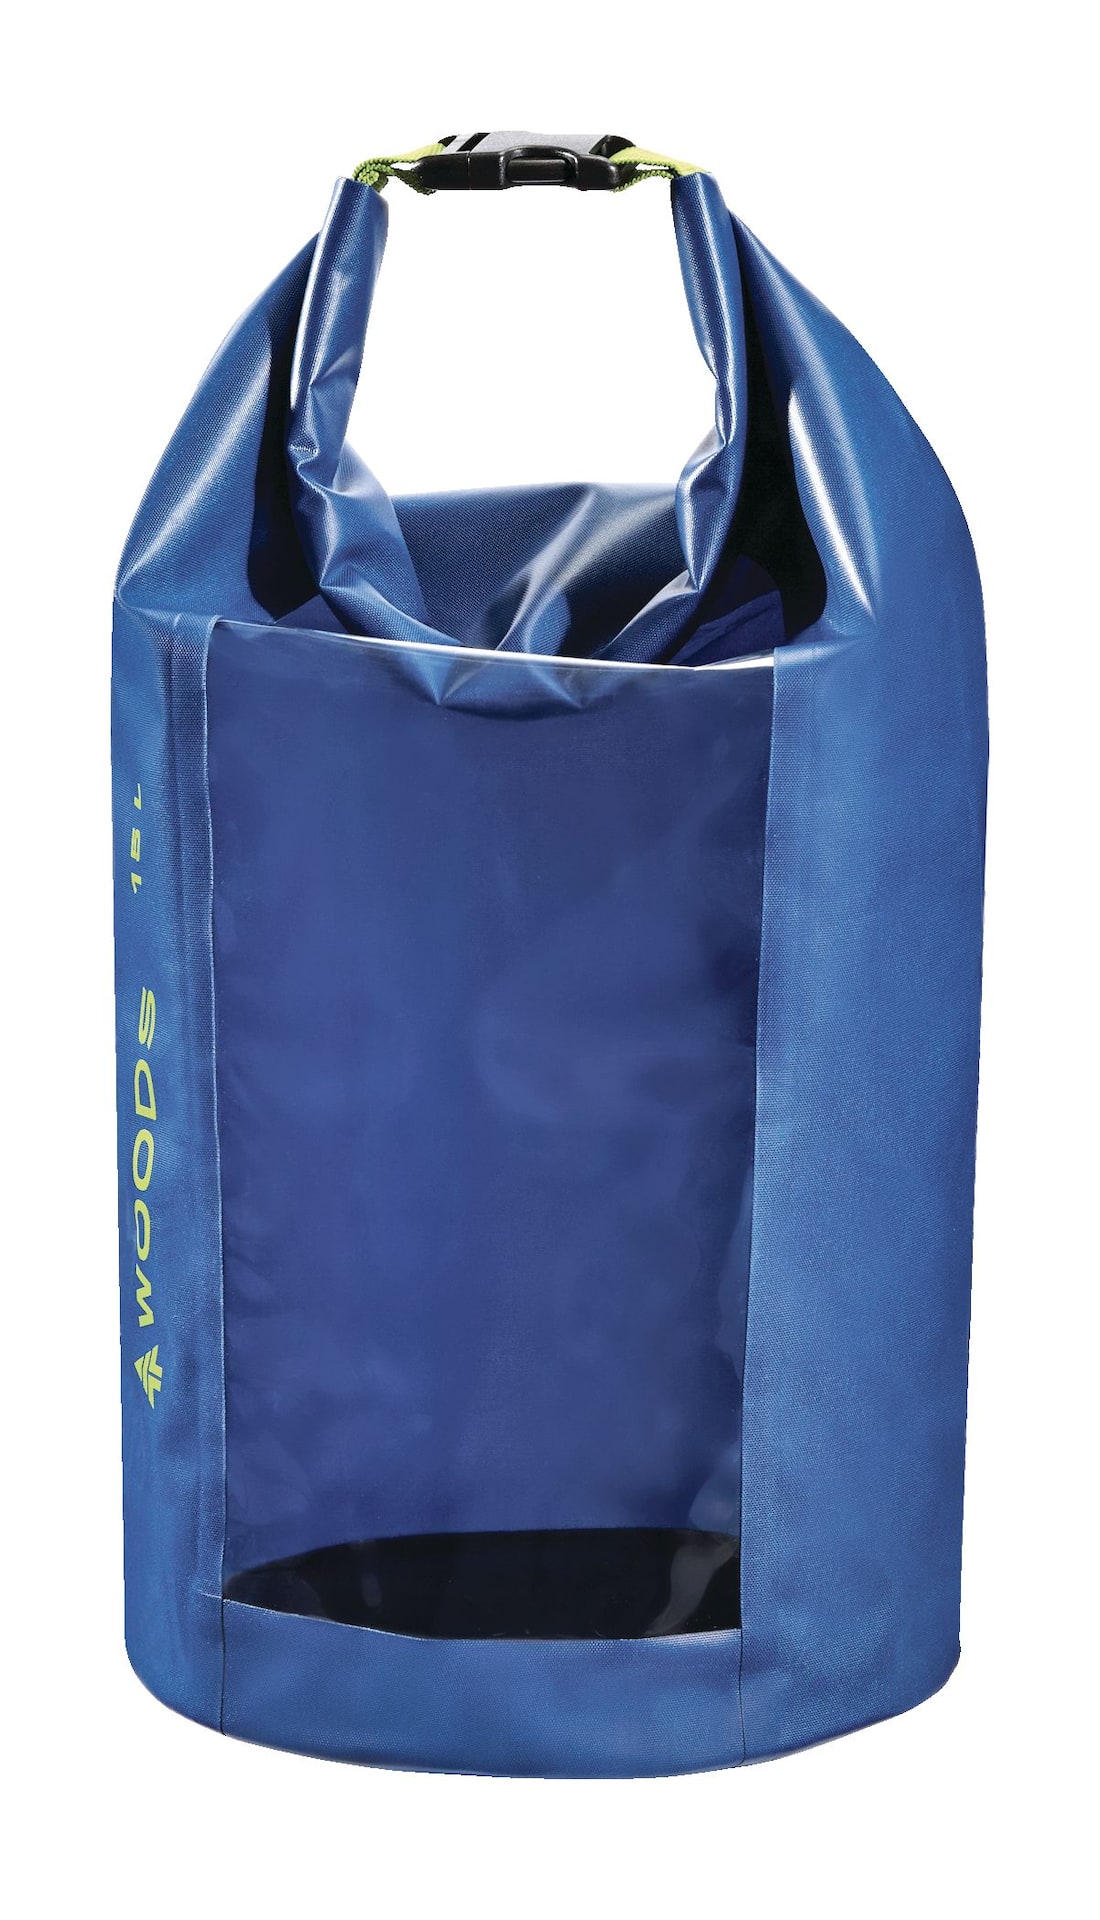 Thai Bag Factory Manufacturing Custom Yoga Bags Sold Wholesale